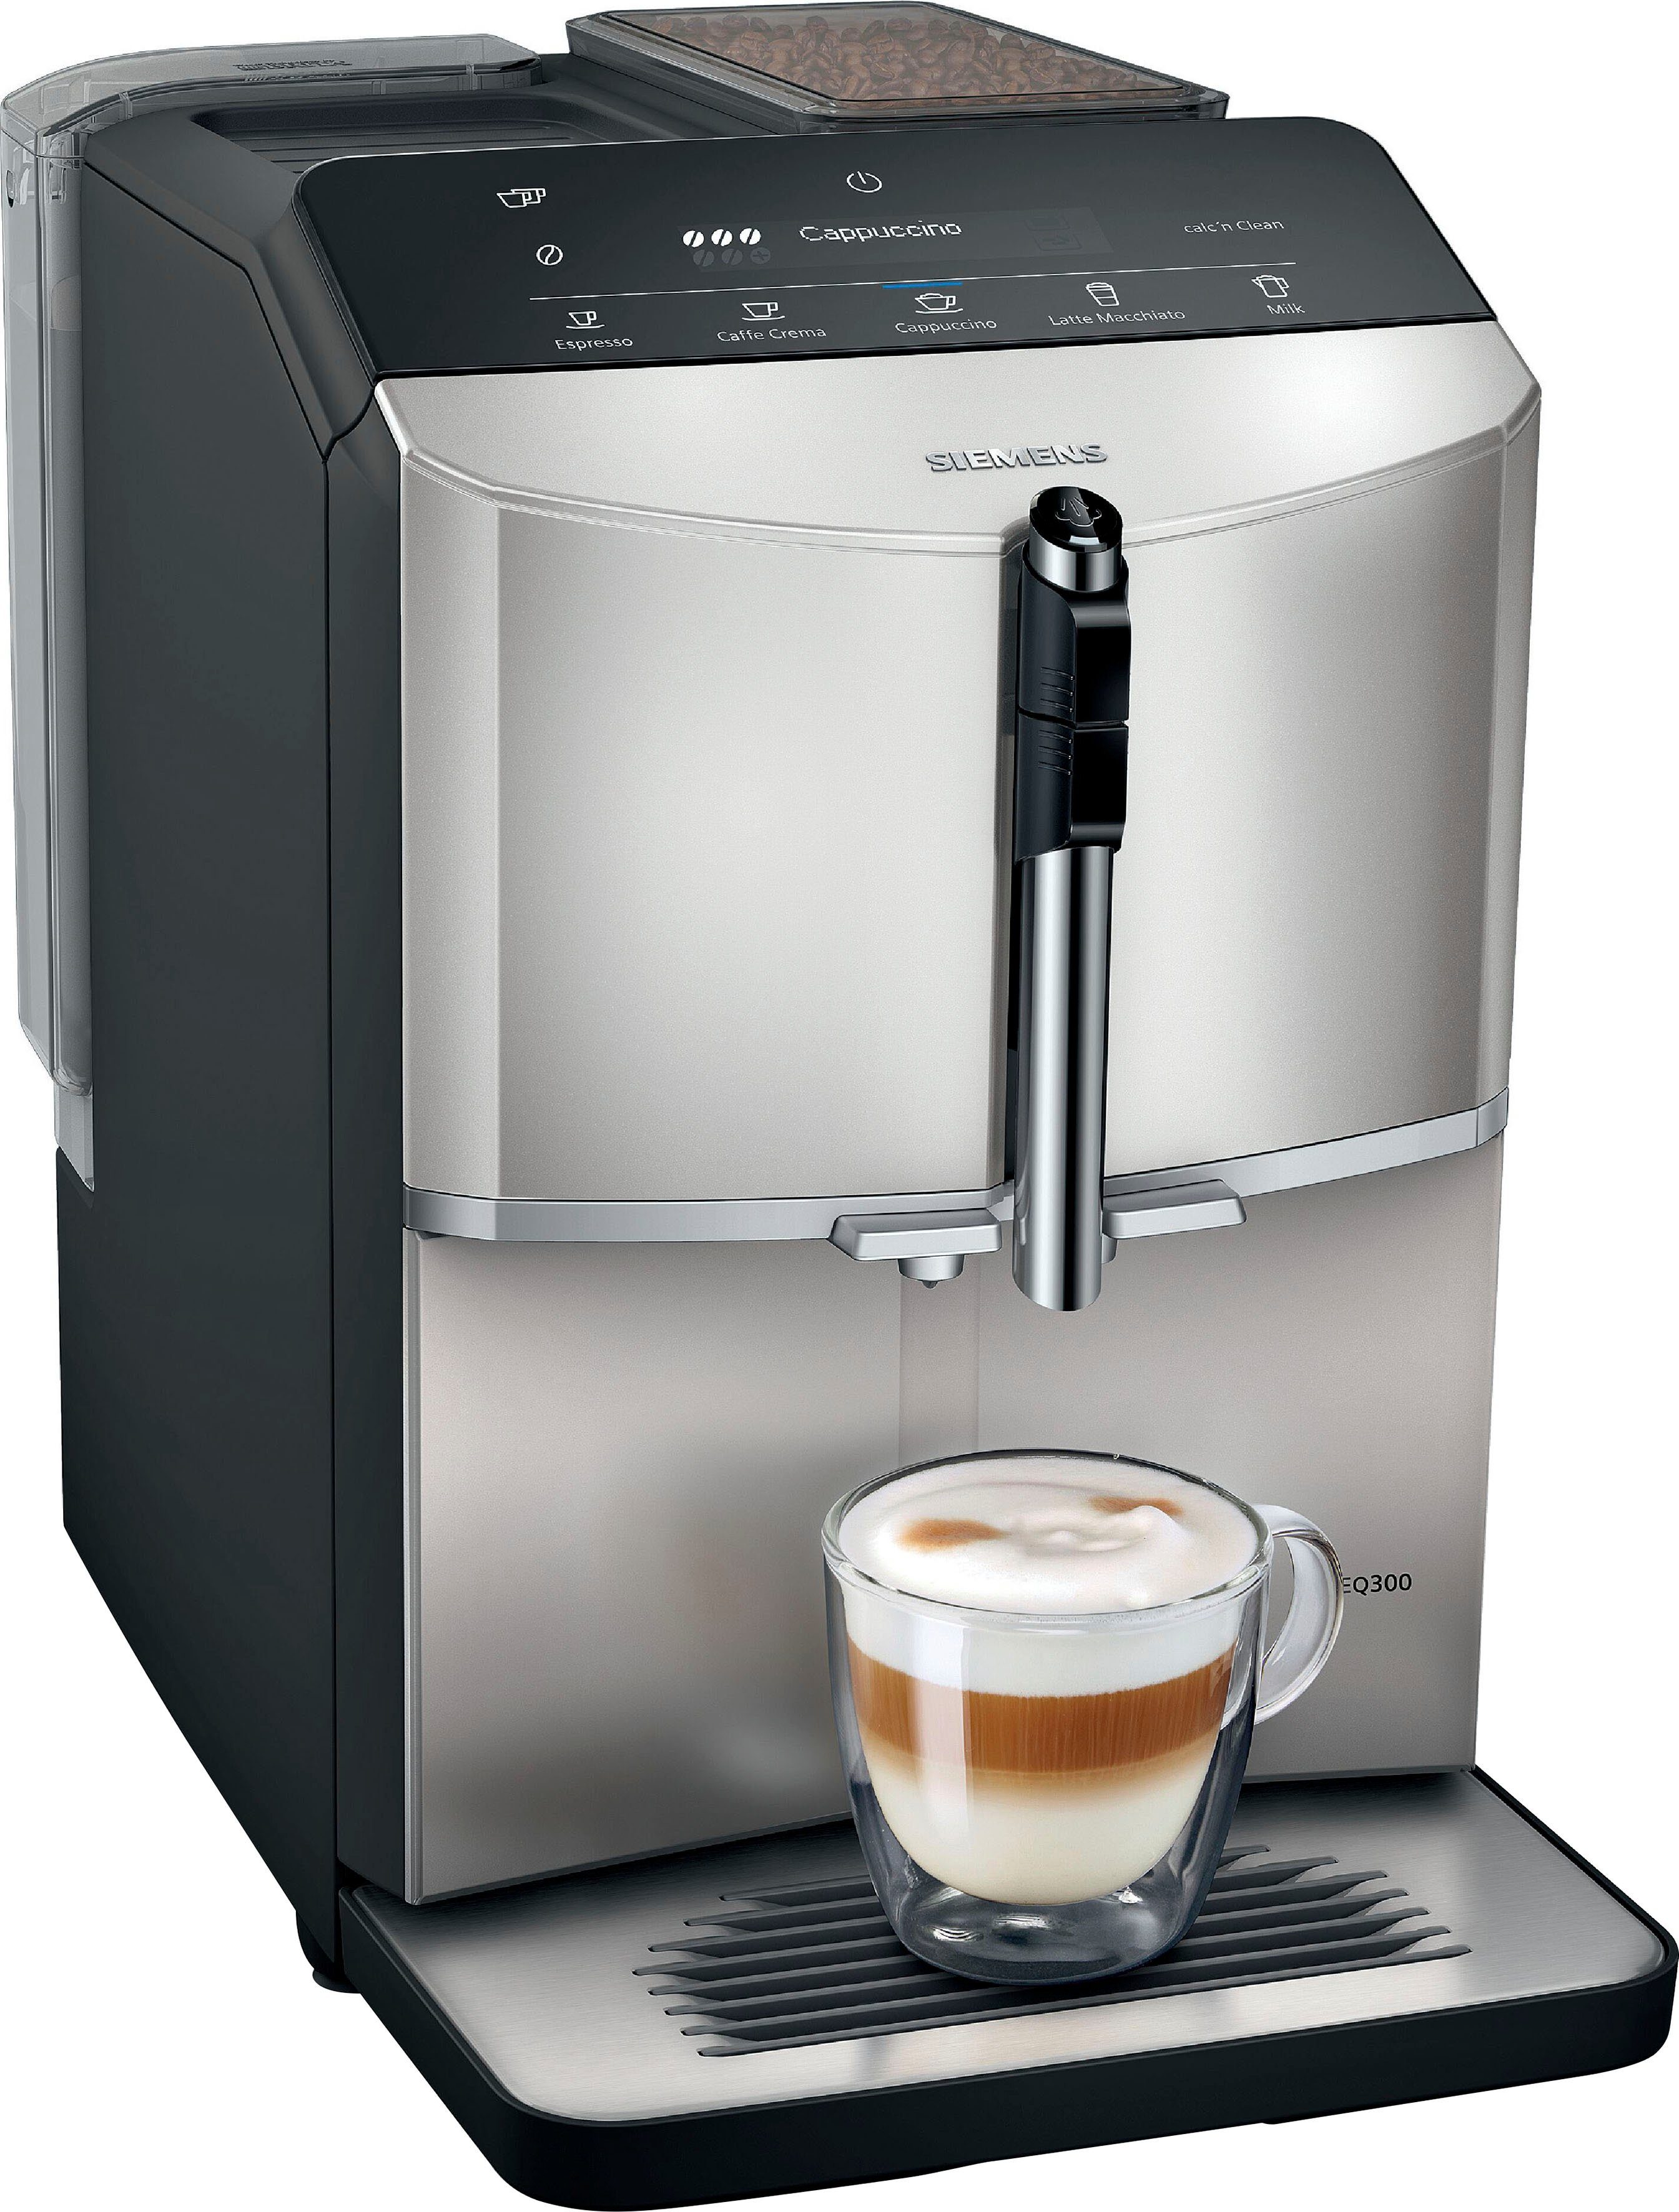 SIEMENS Kaffeevollautomat TF303E07, Inox silver metallic | Kaffeevollautomaten